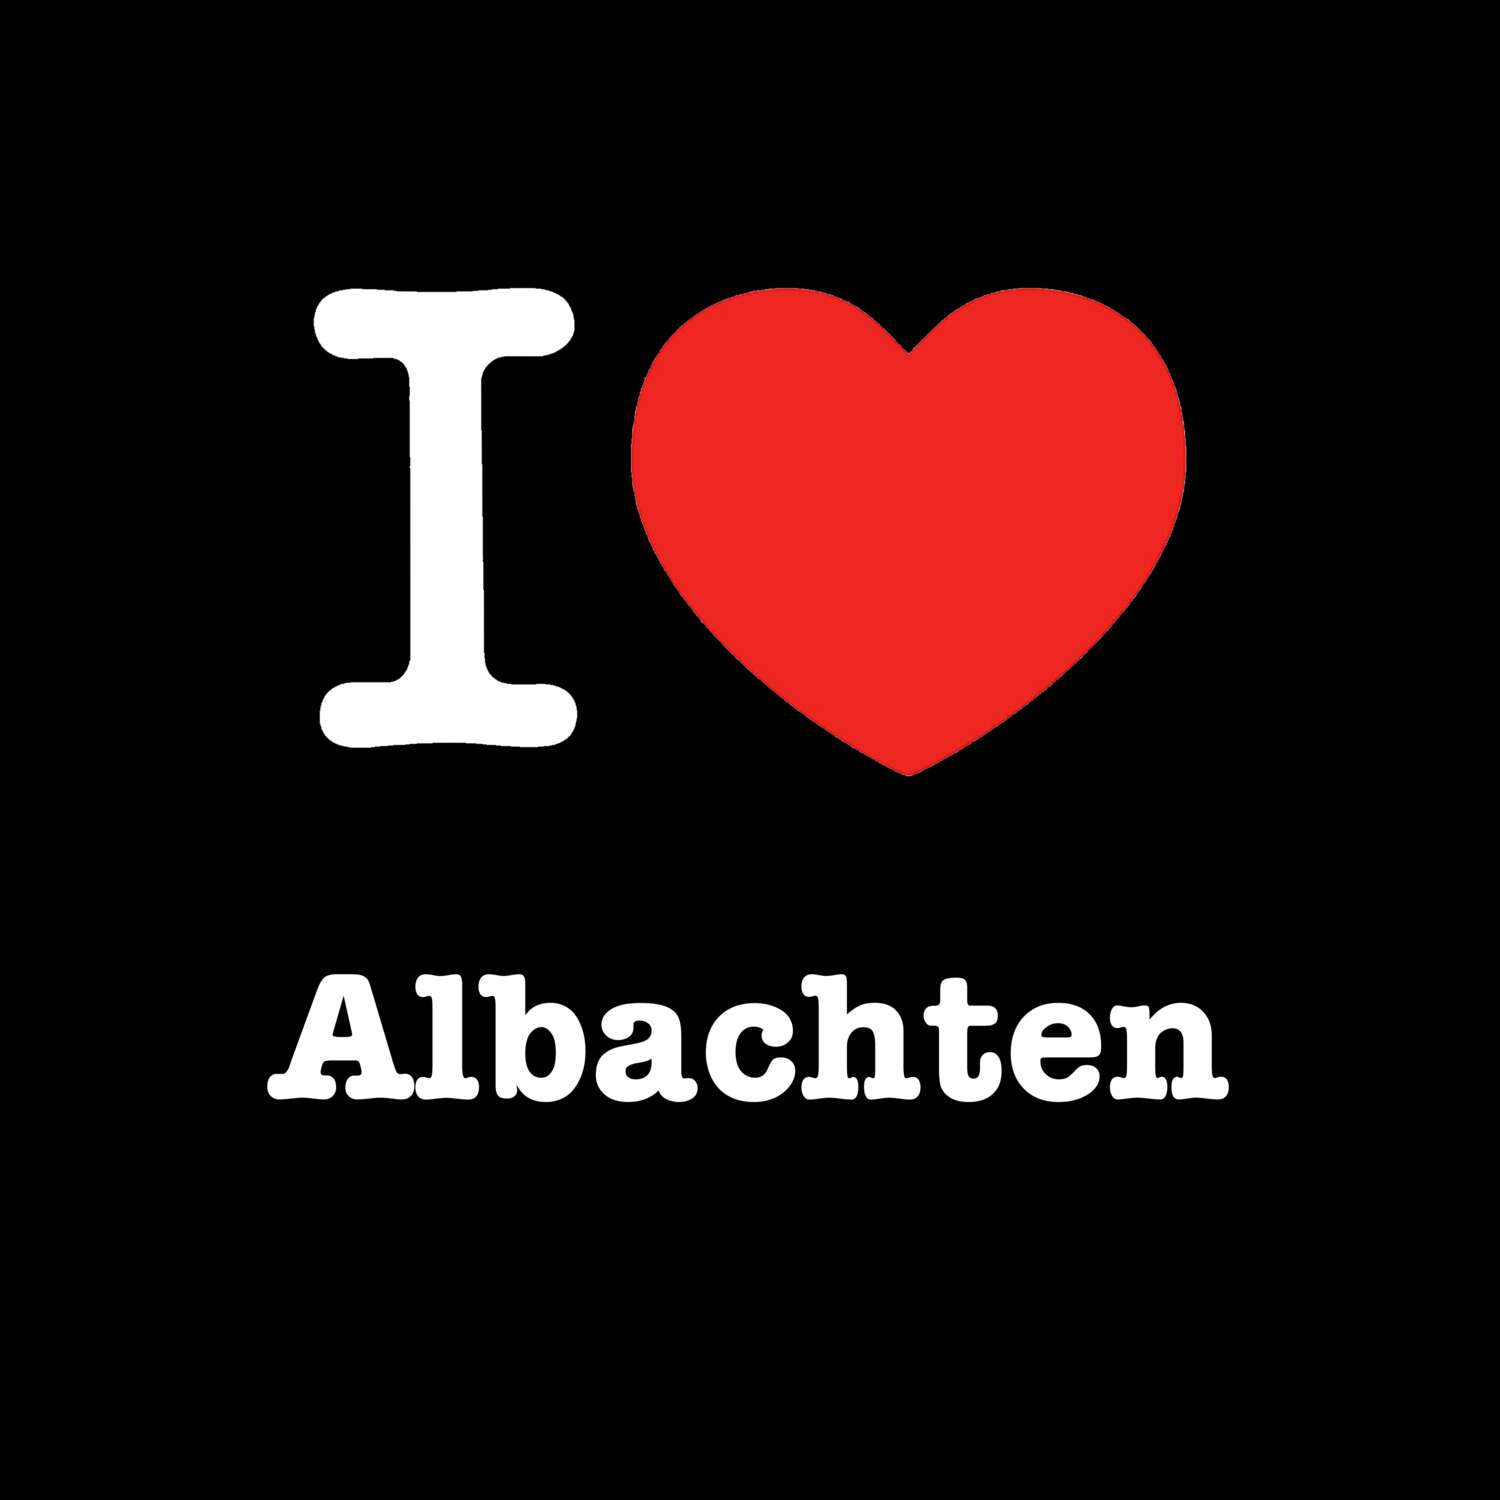 Albachten T-Shirt »I love«